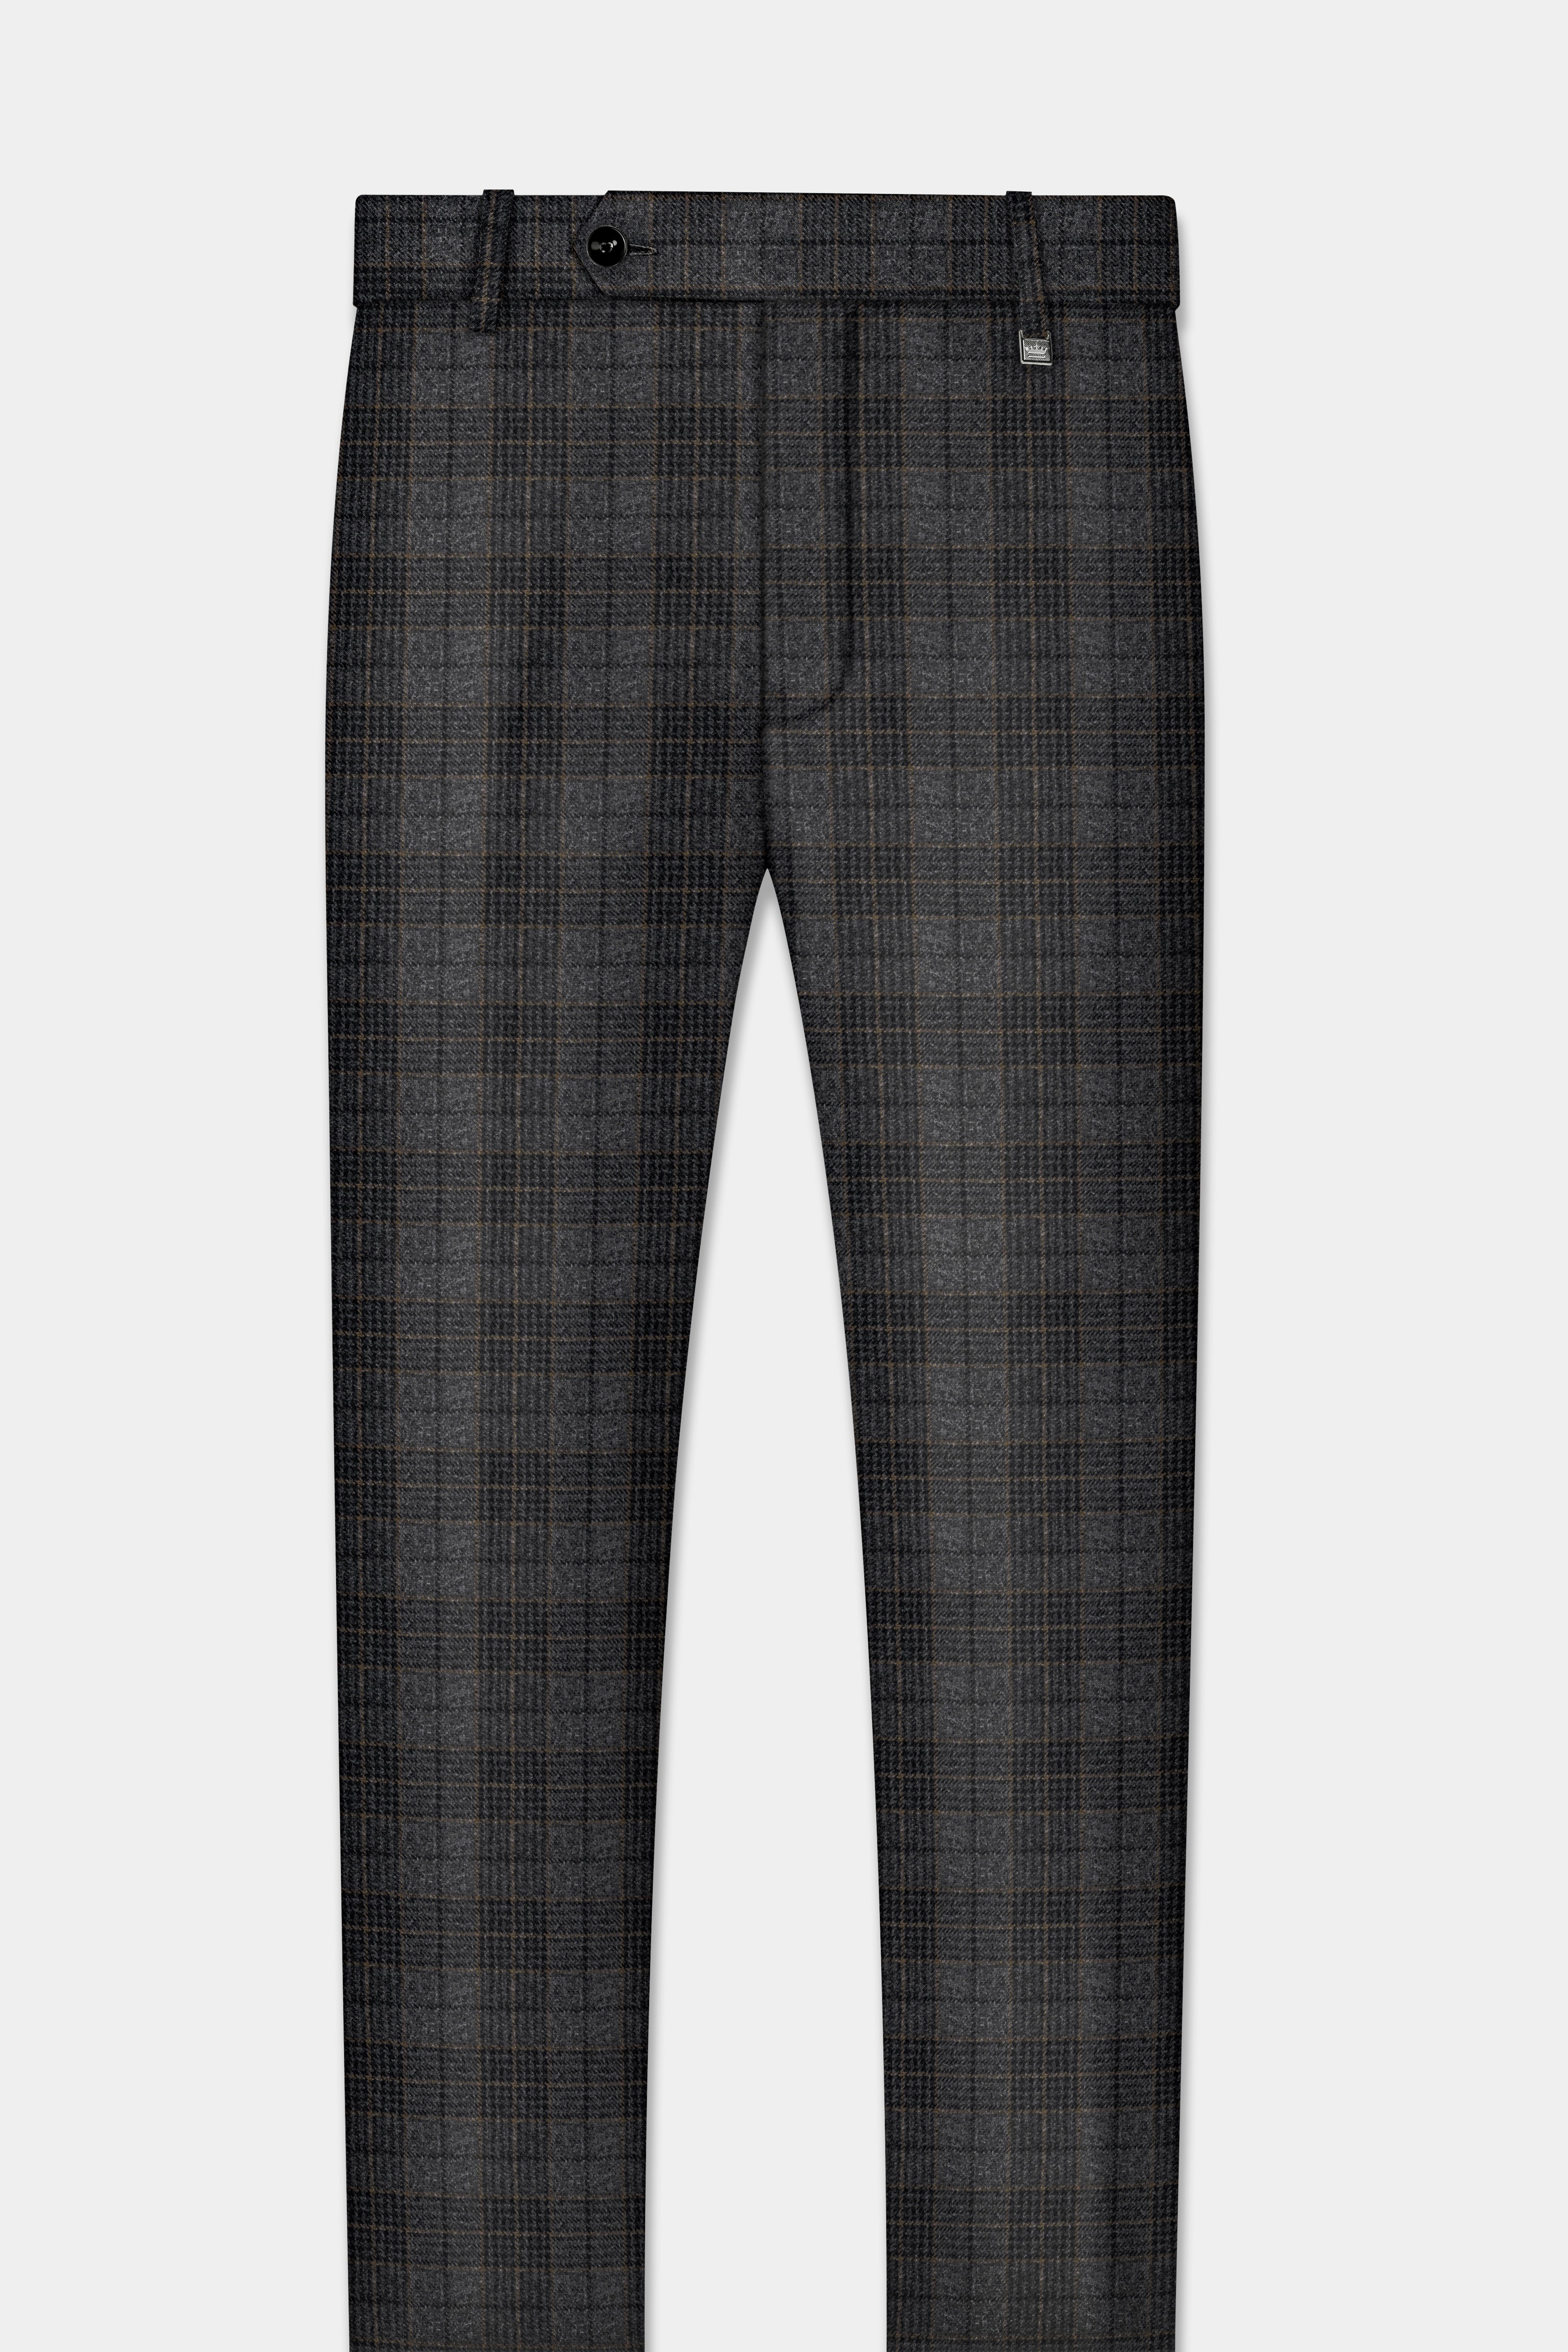 Charcoal Gray Plaid Tweed Pant